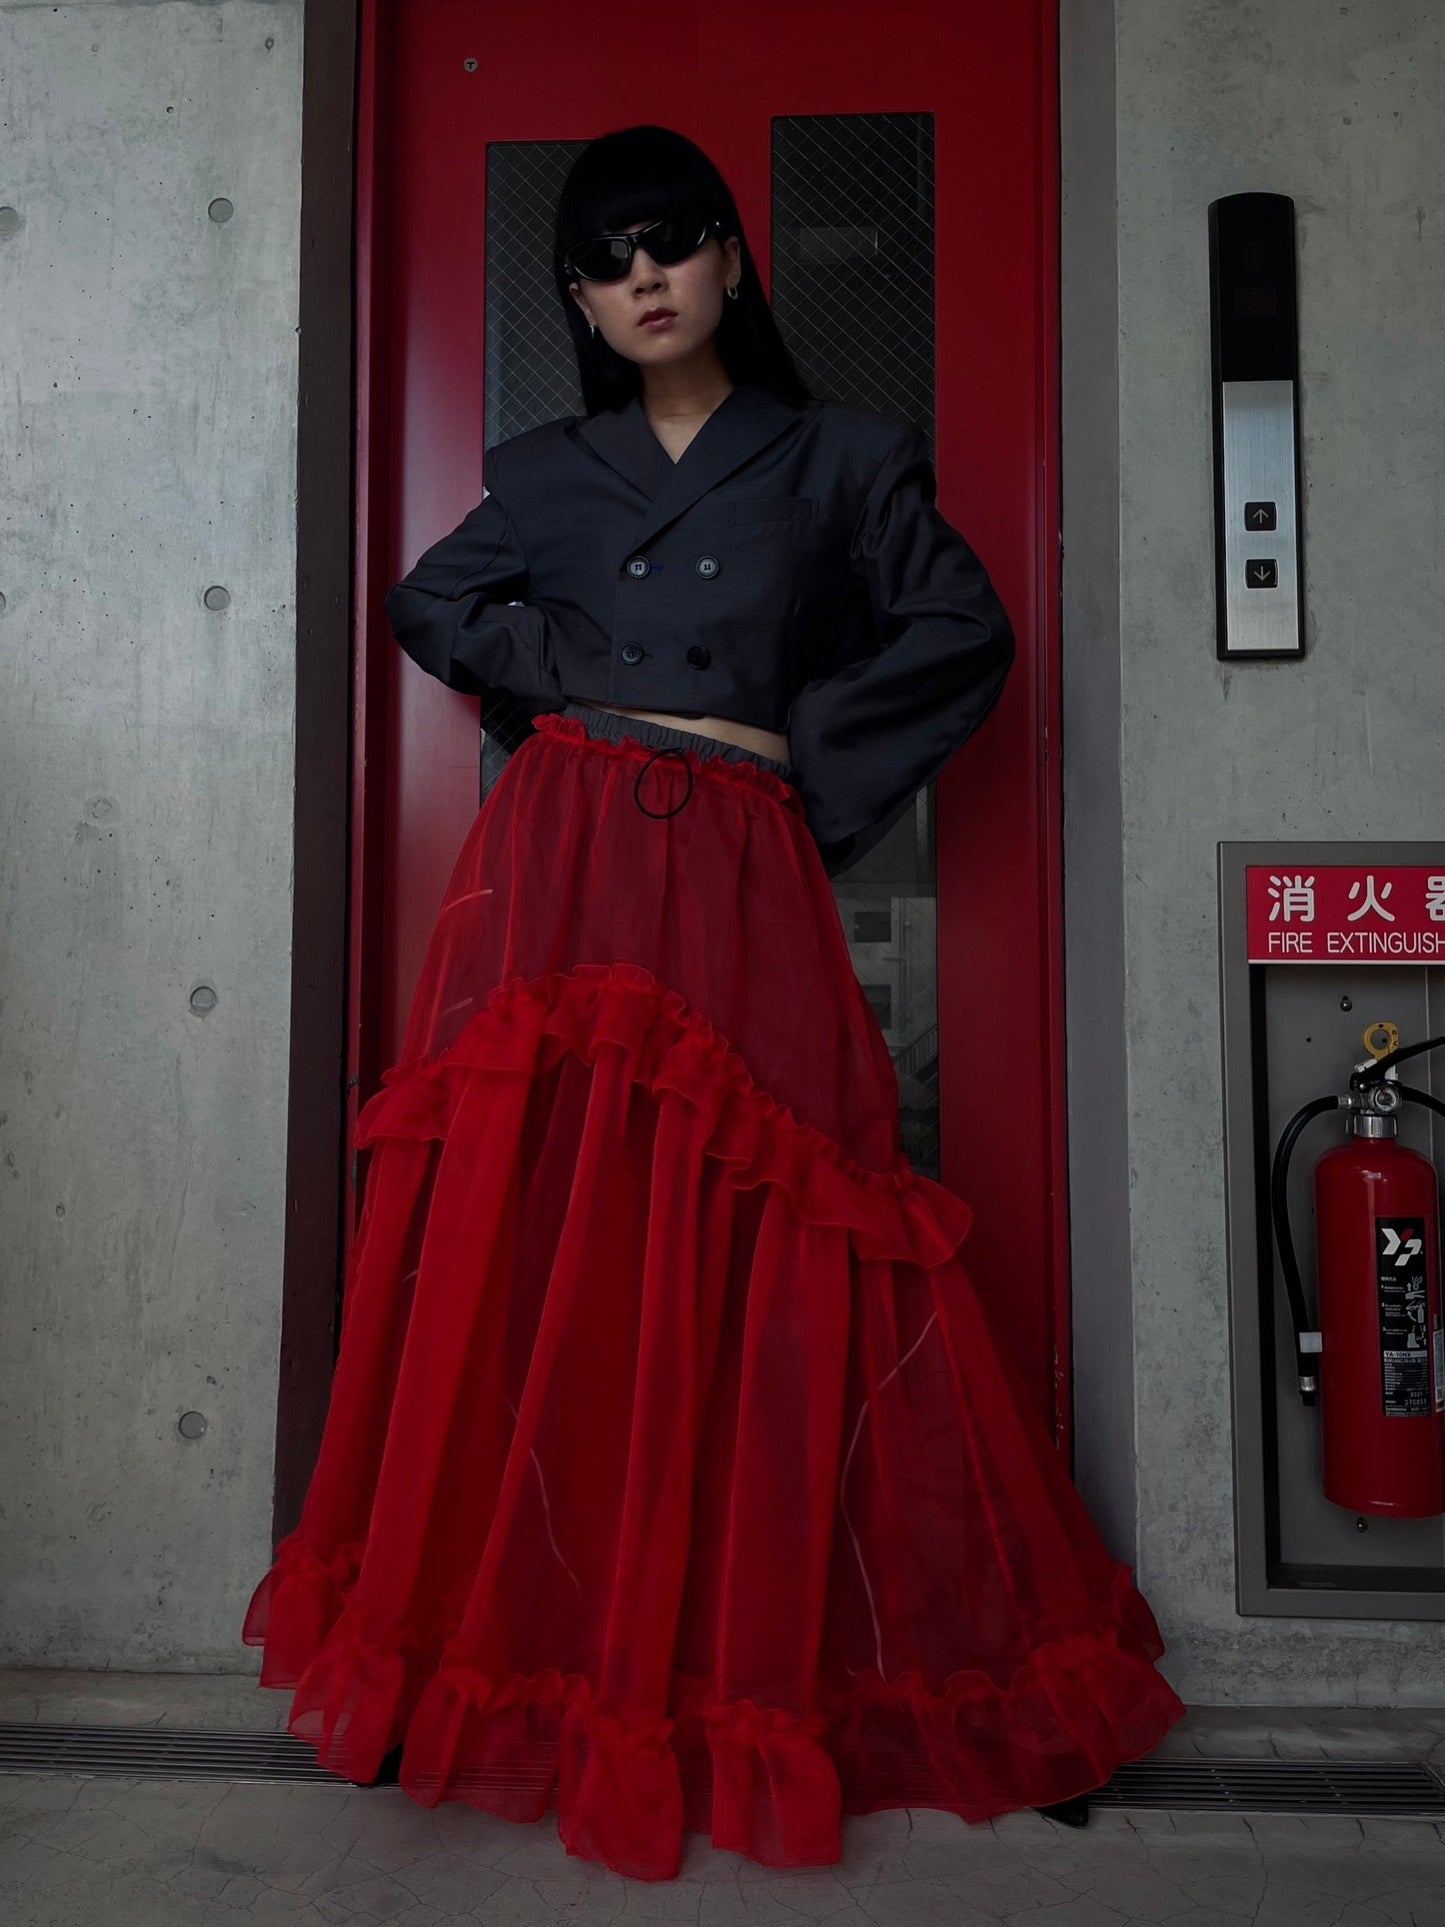 Sheer Organdy Skirt(Red)